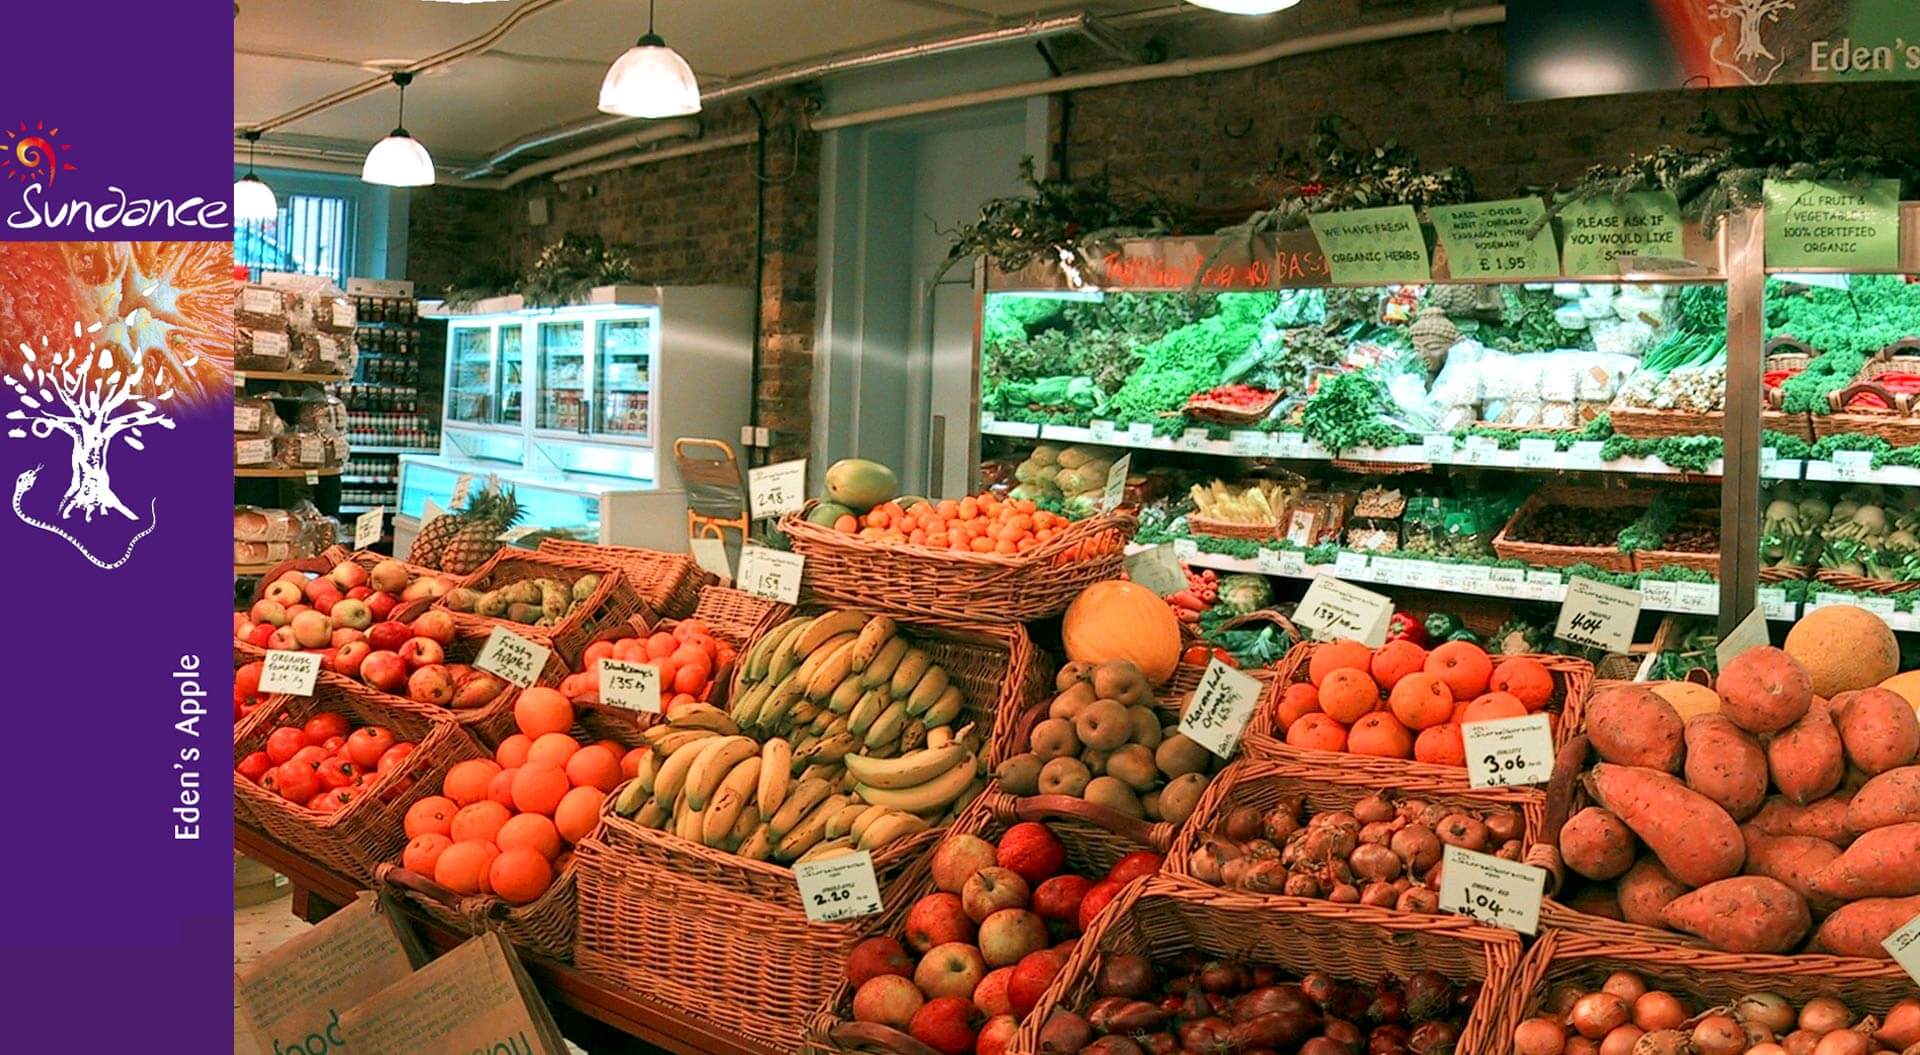 Sundace Organic supermarket fresh produce display with department branding